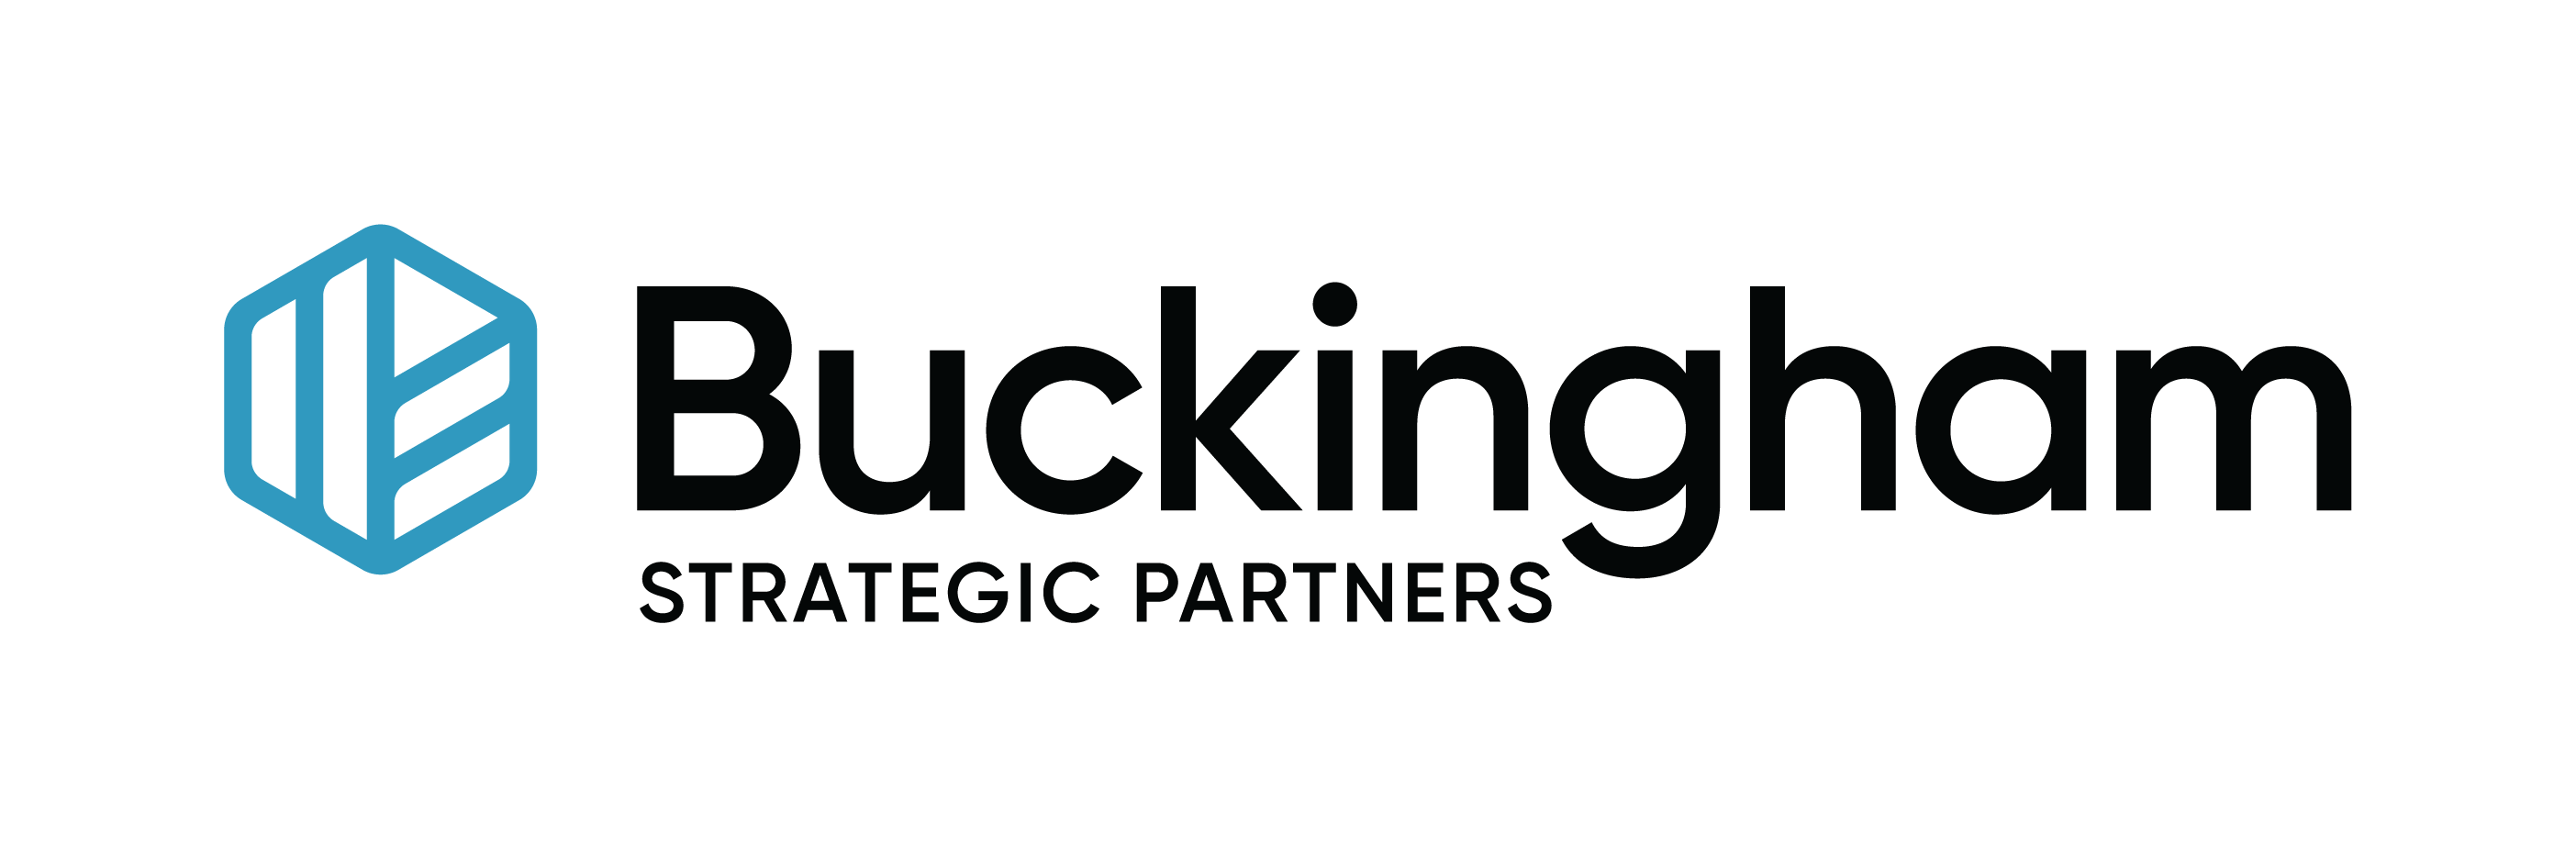  Buckingham Strategic Partners